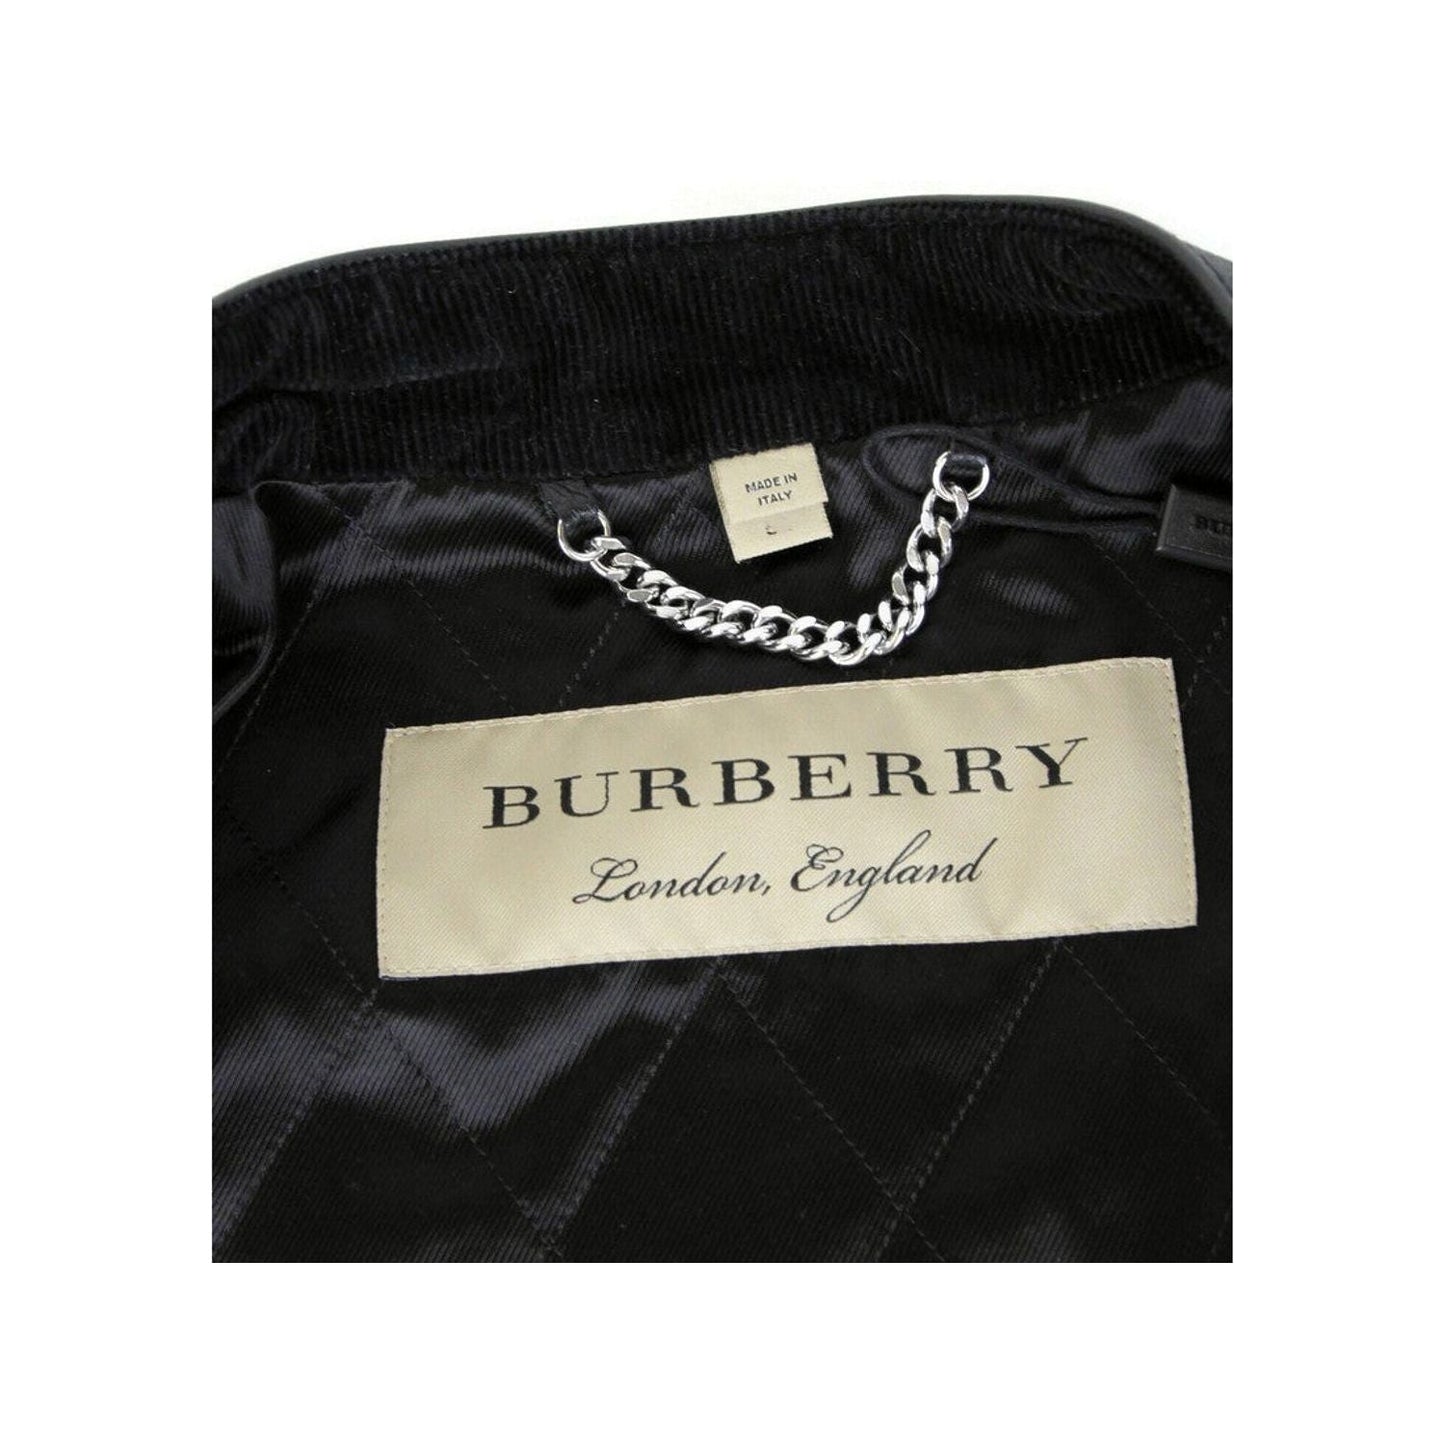 Burberry Burberry Men's Black Leather Diamond Quilted Biker Jacket burberry-mens-black-leather-diamond-quilted-biker-jacket